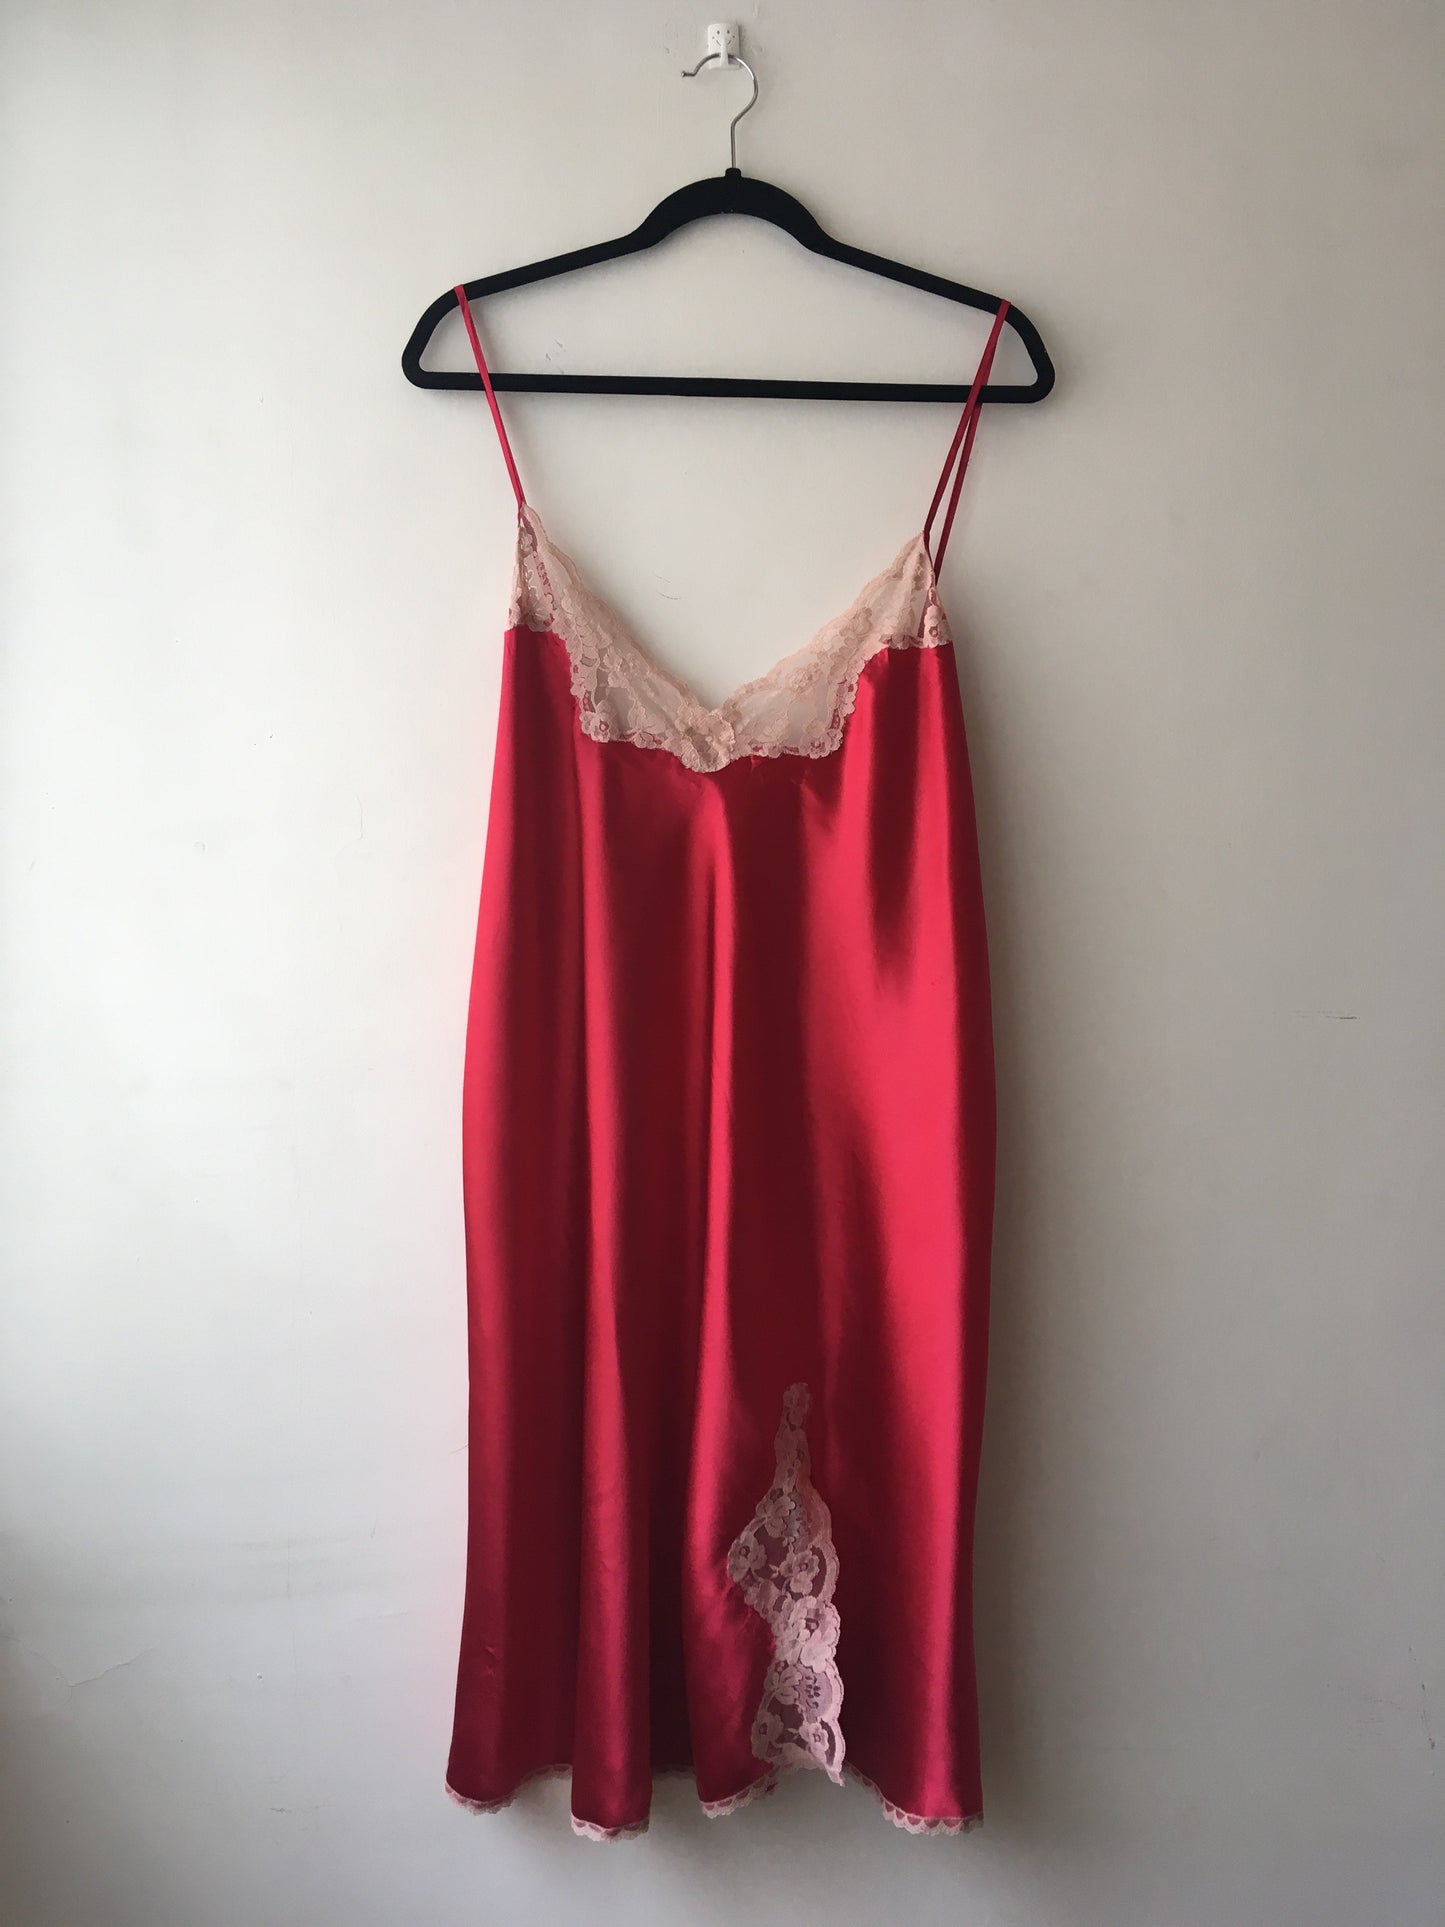 Red Slip Dress